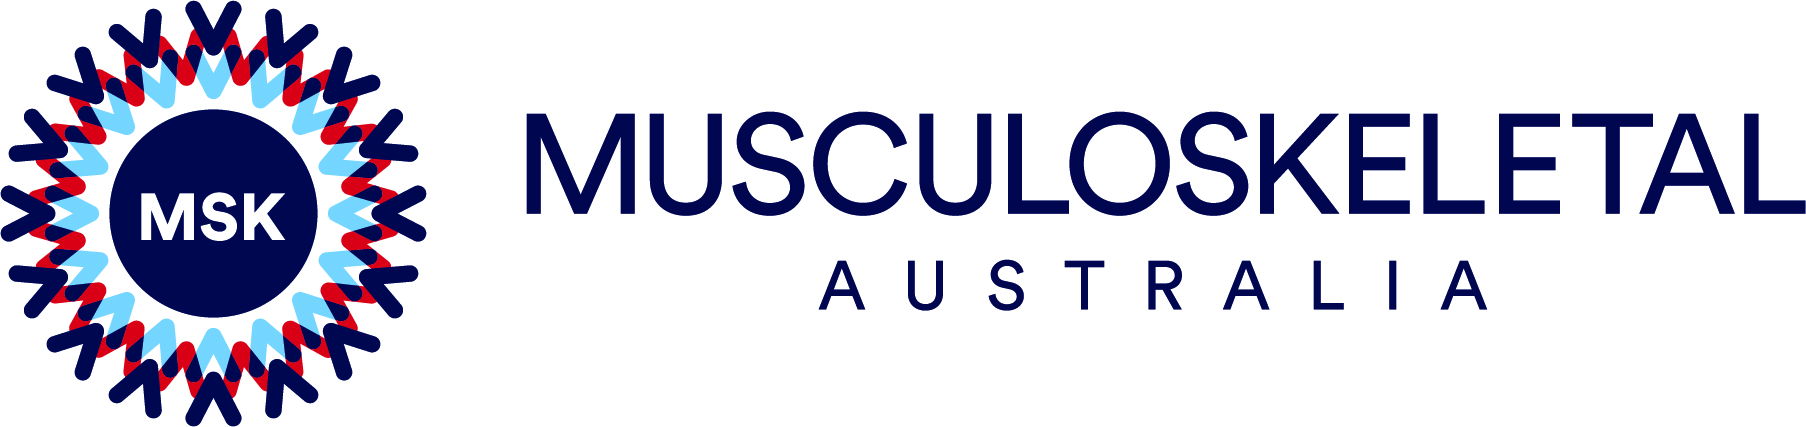 Musculoskeletal Australia logo